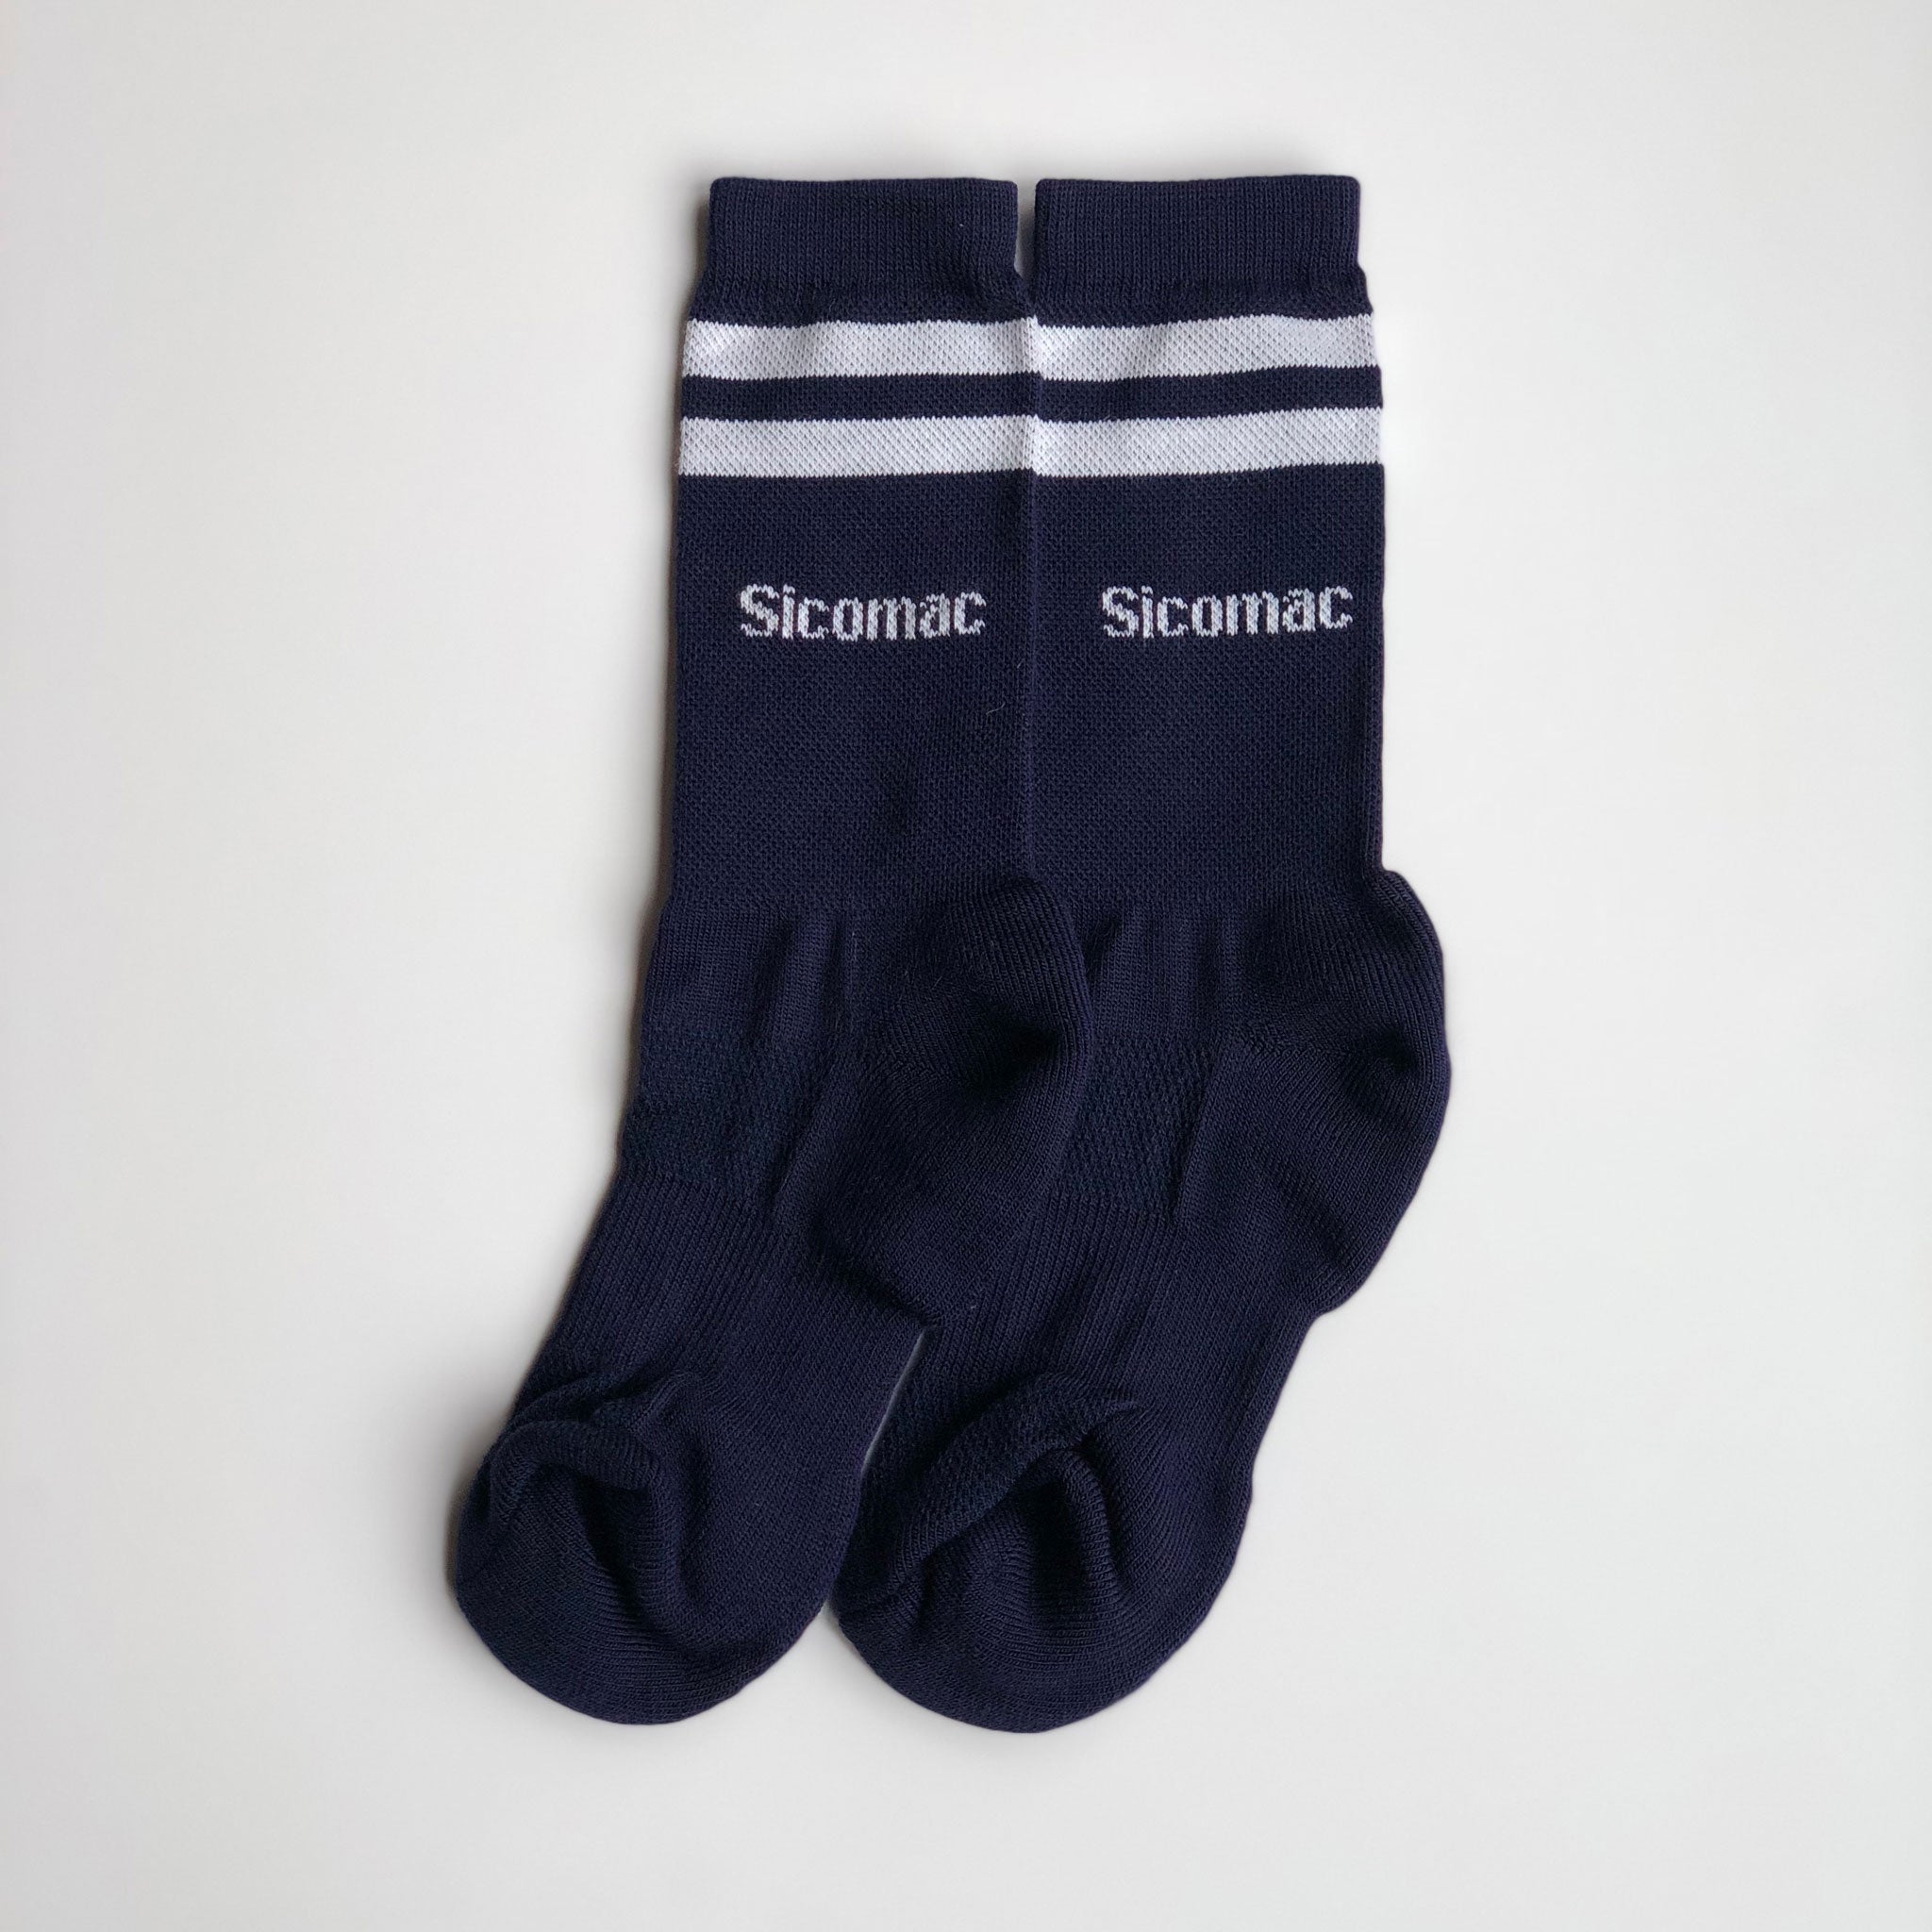 Sicomac Crew Socks